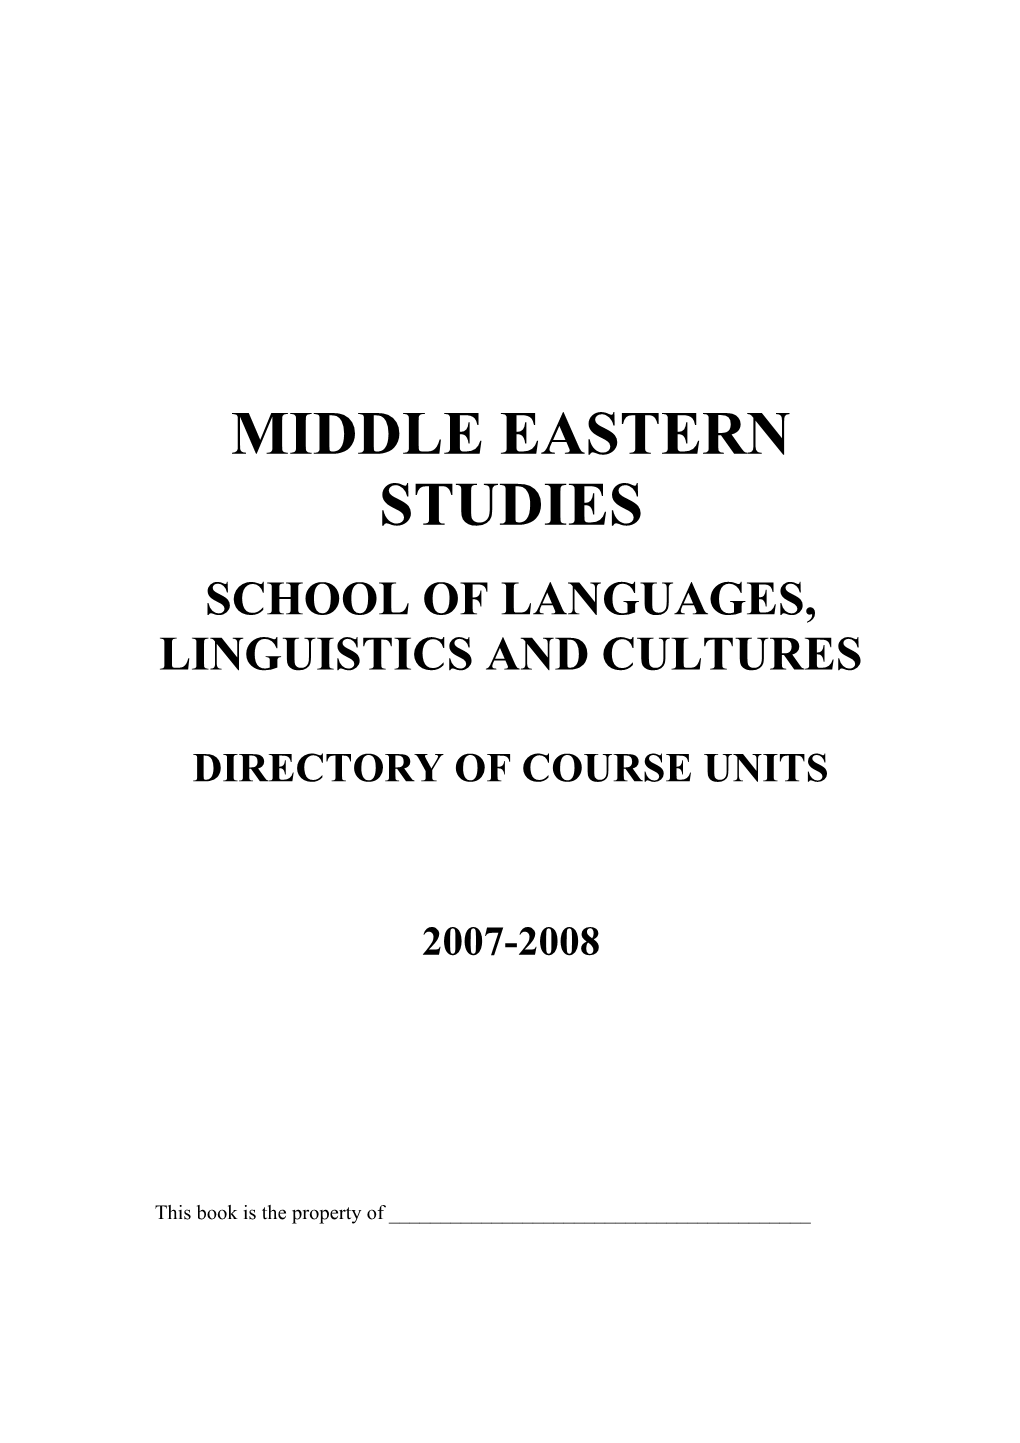 School of Languages, Linguistics and Cultures